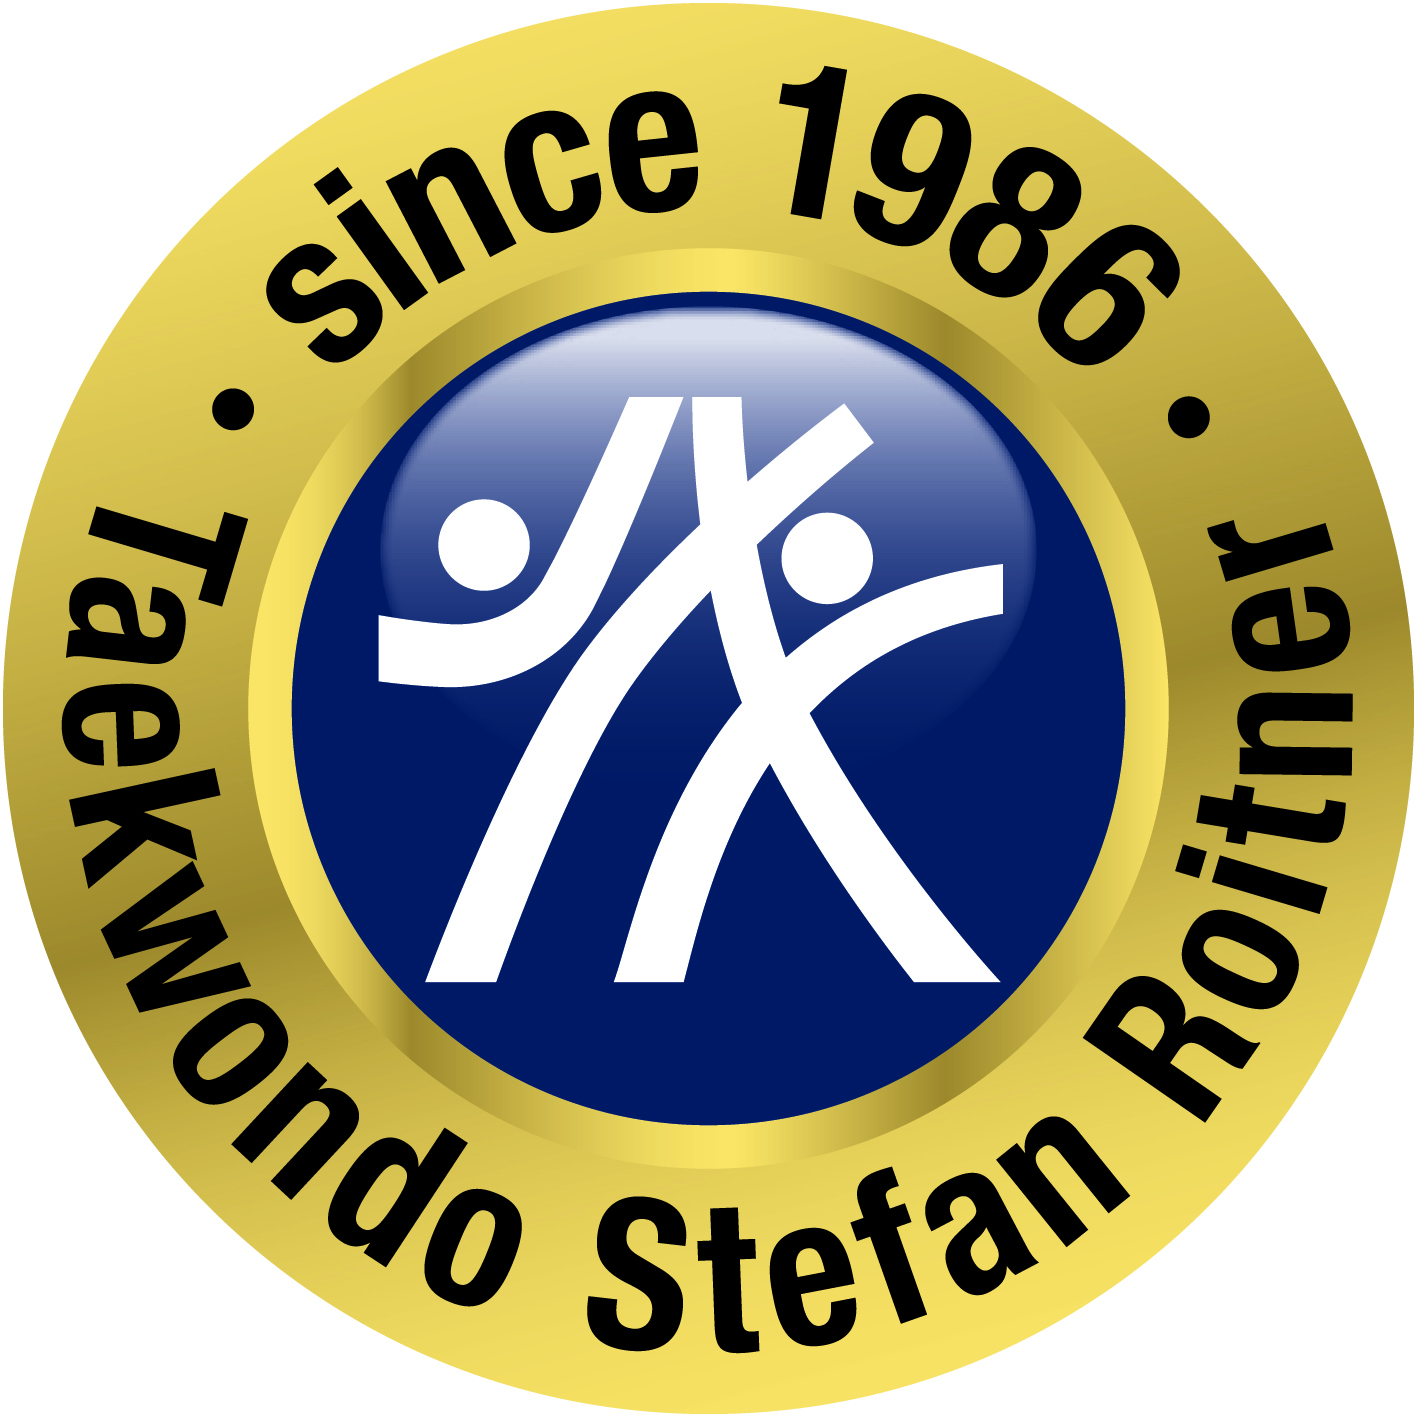 Taekwondo Rosenheim since 1986